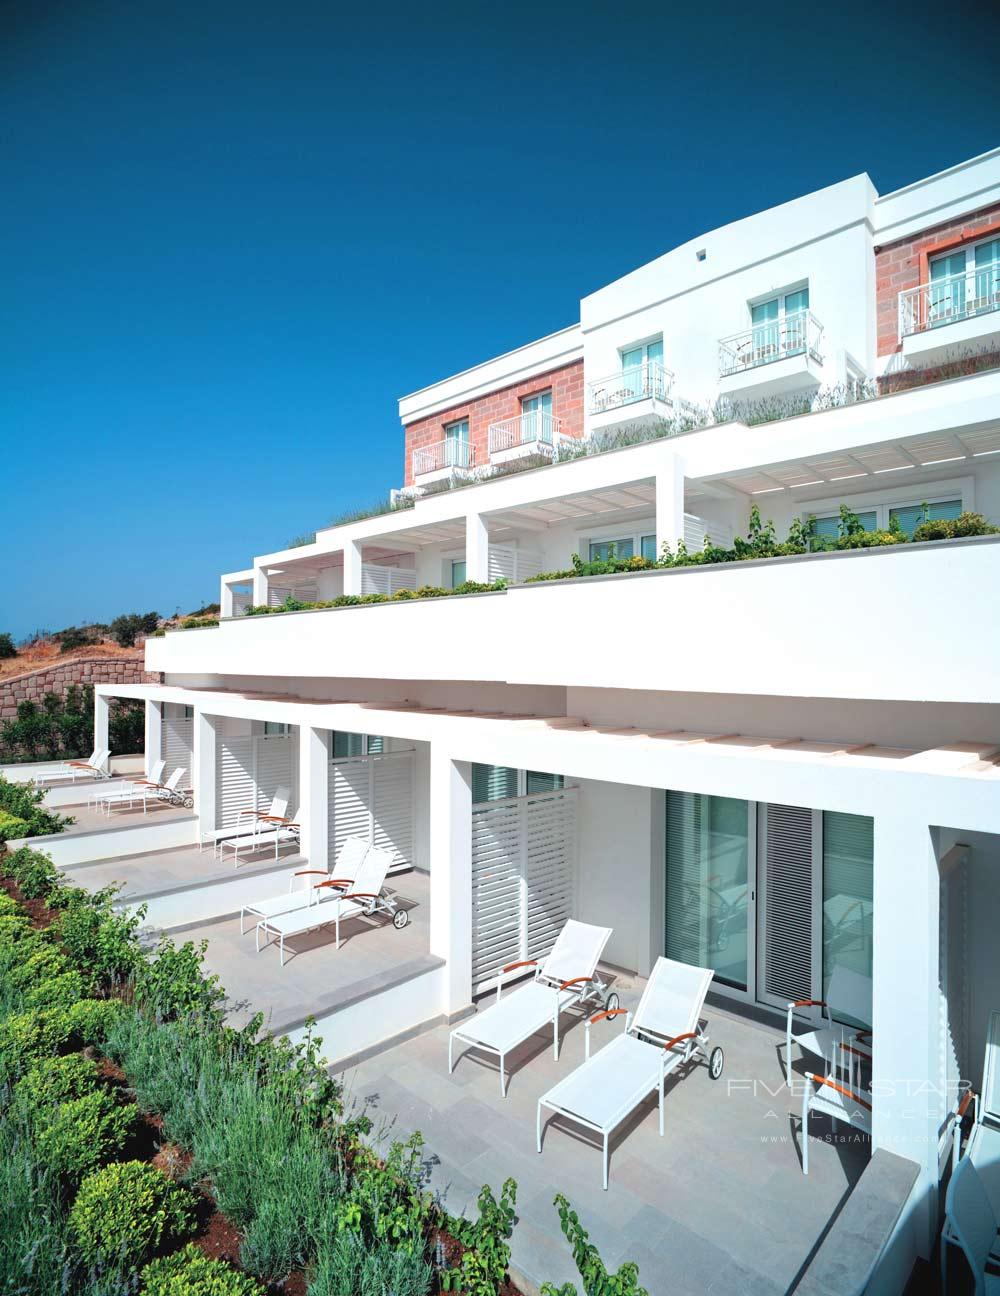 Grand Deluxe Sea Room Terrace View at Doria Hotel Bodrum, Turkey